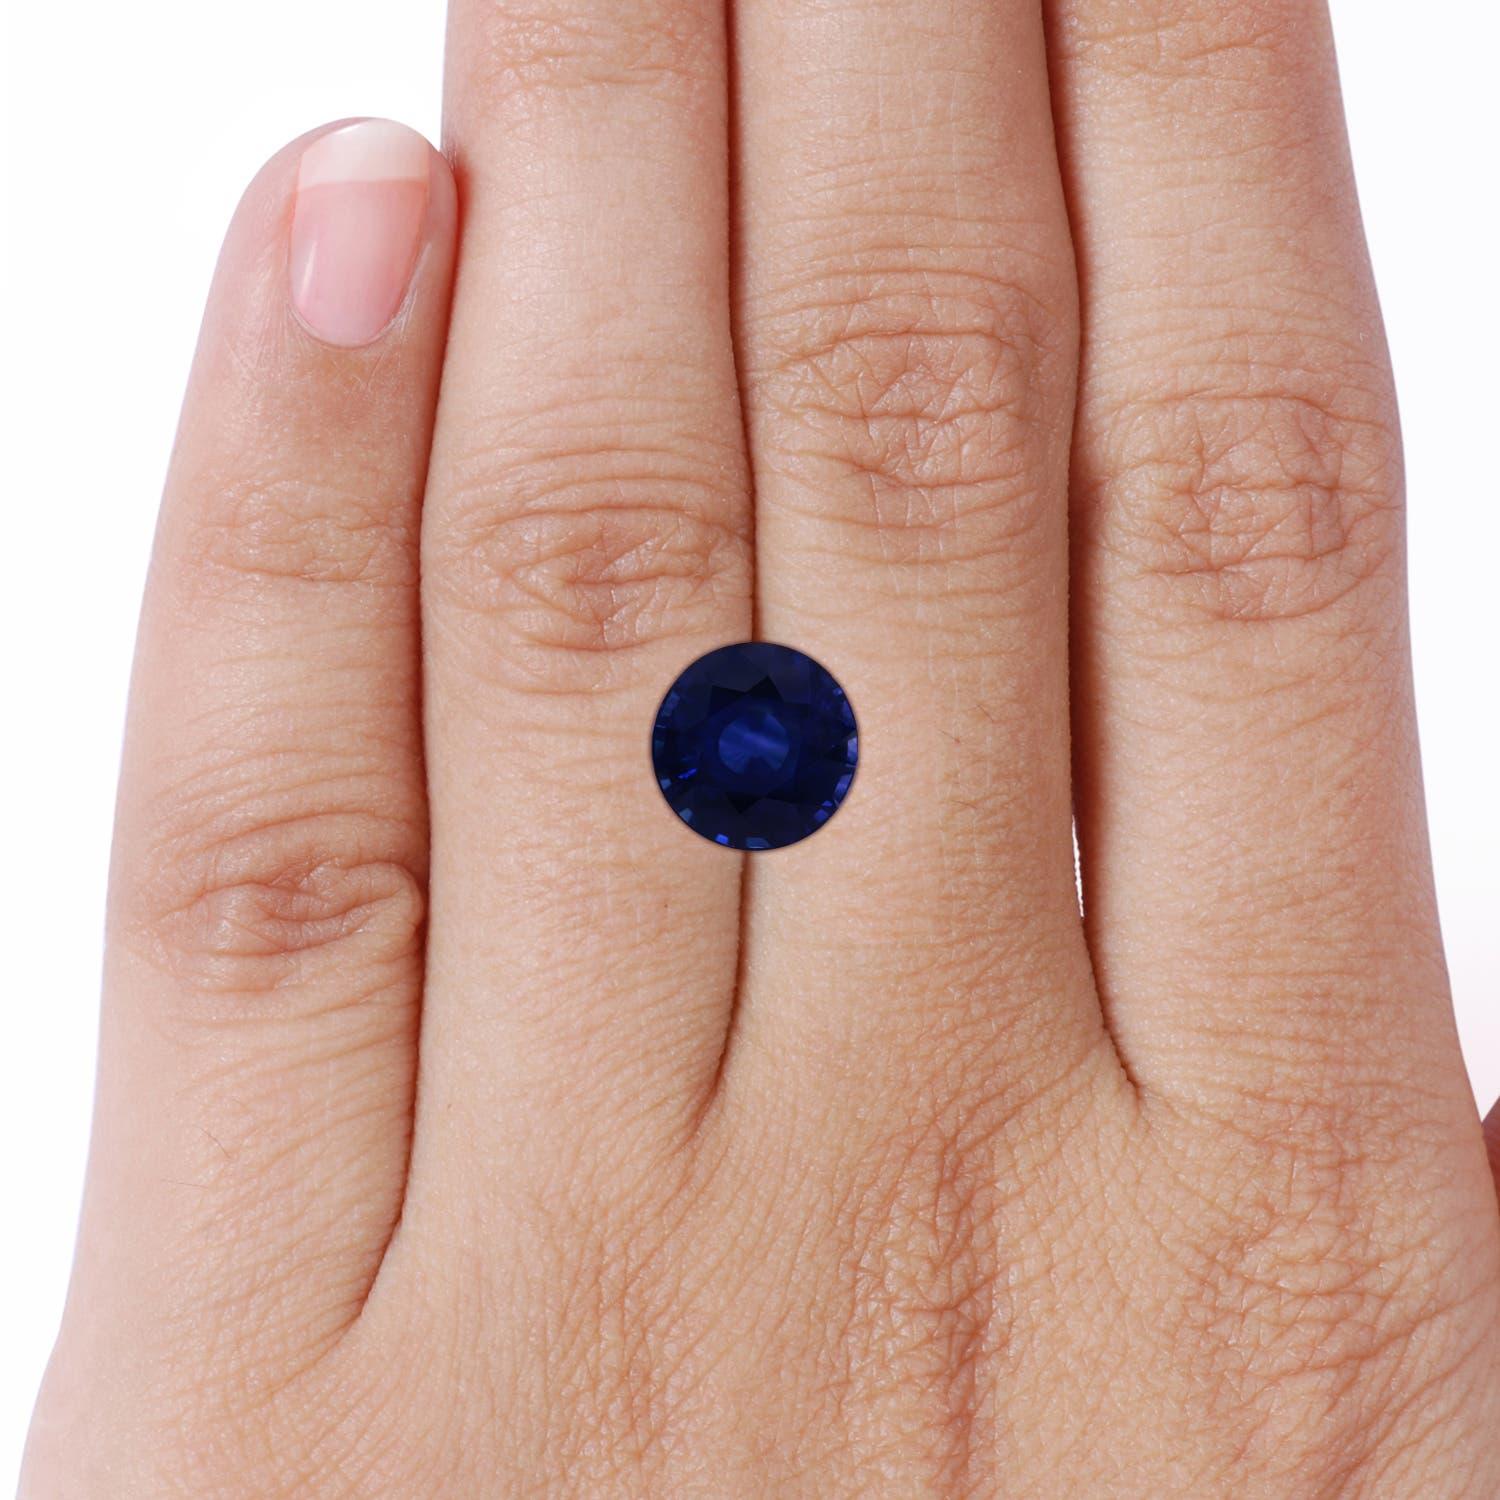 En vente :  ANGARA Bague en platine avec saphir bleu naturel certifié GIA de 6,63 carats et diamants 6